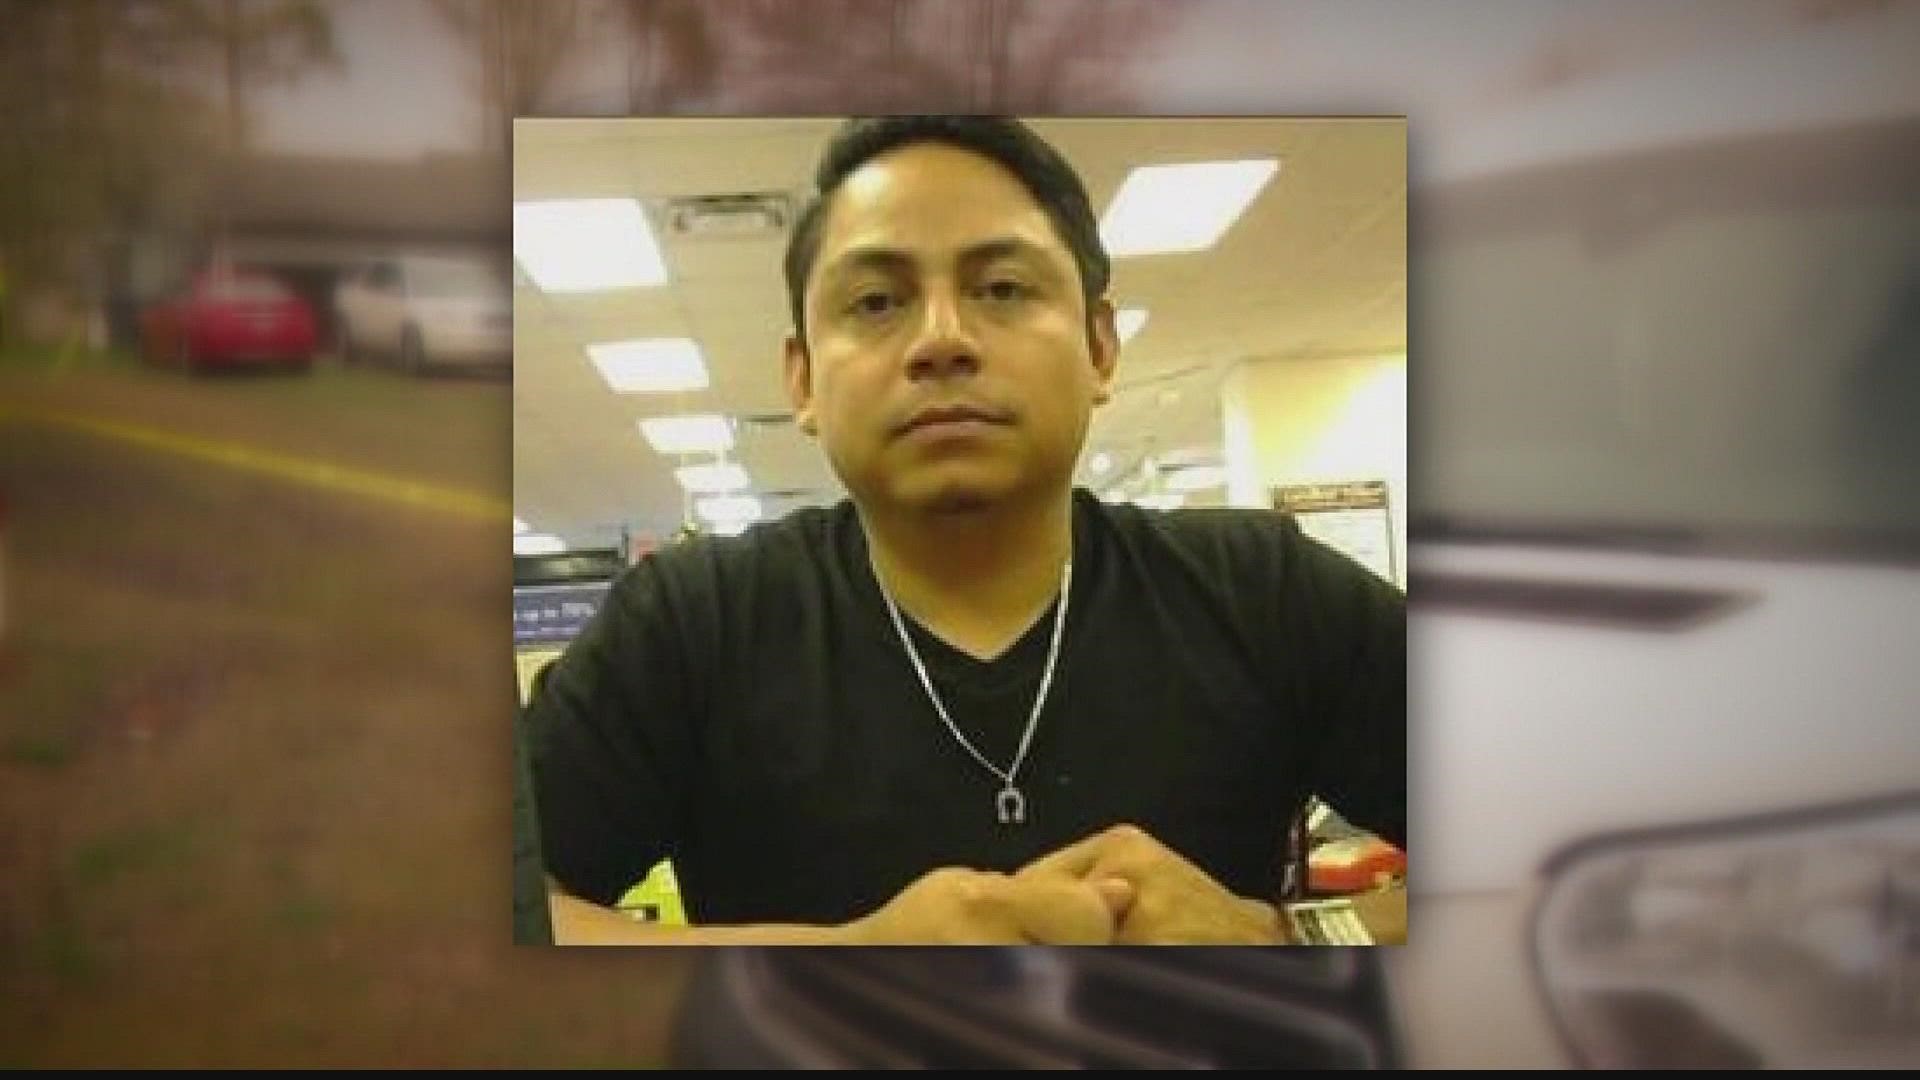 The suspect is identified as 34-year-old Juan Escalante-Alarcon.